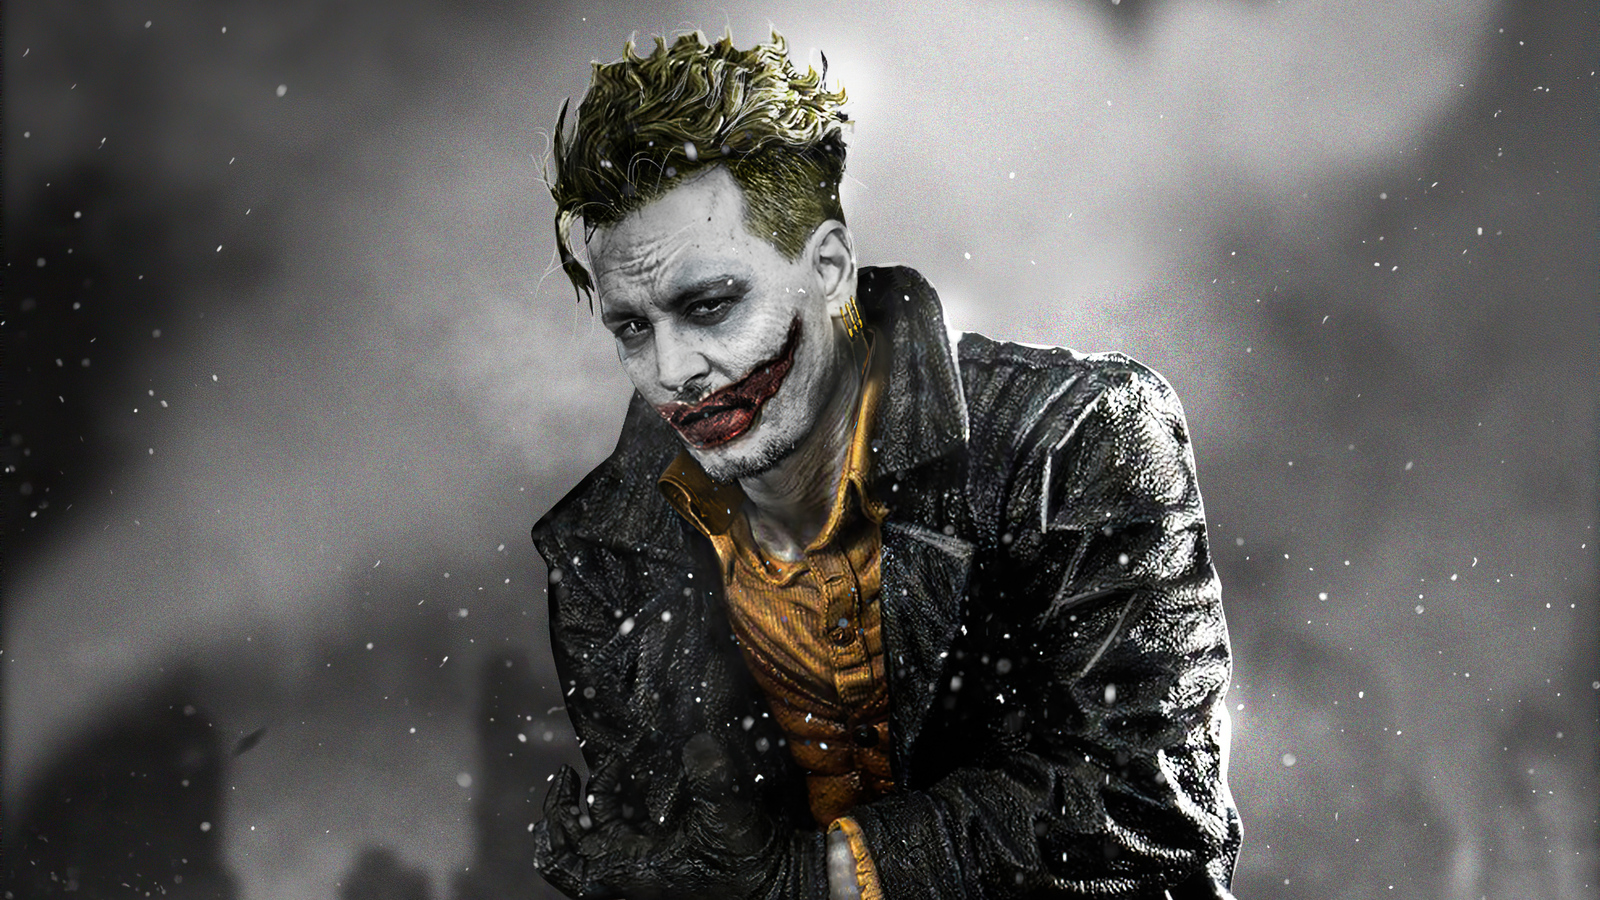 1600x900 Joker Johnny Depp 1600x900 Resolution HD 4k Wallpapers, Images ...